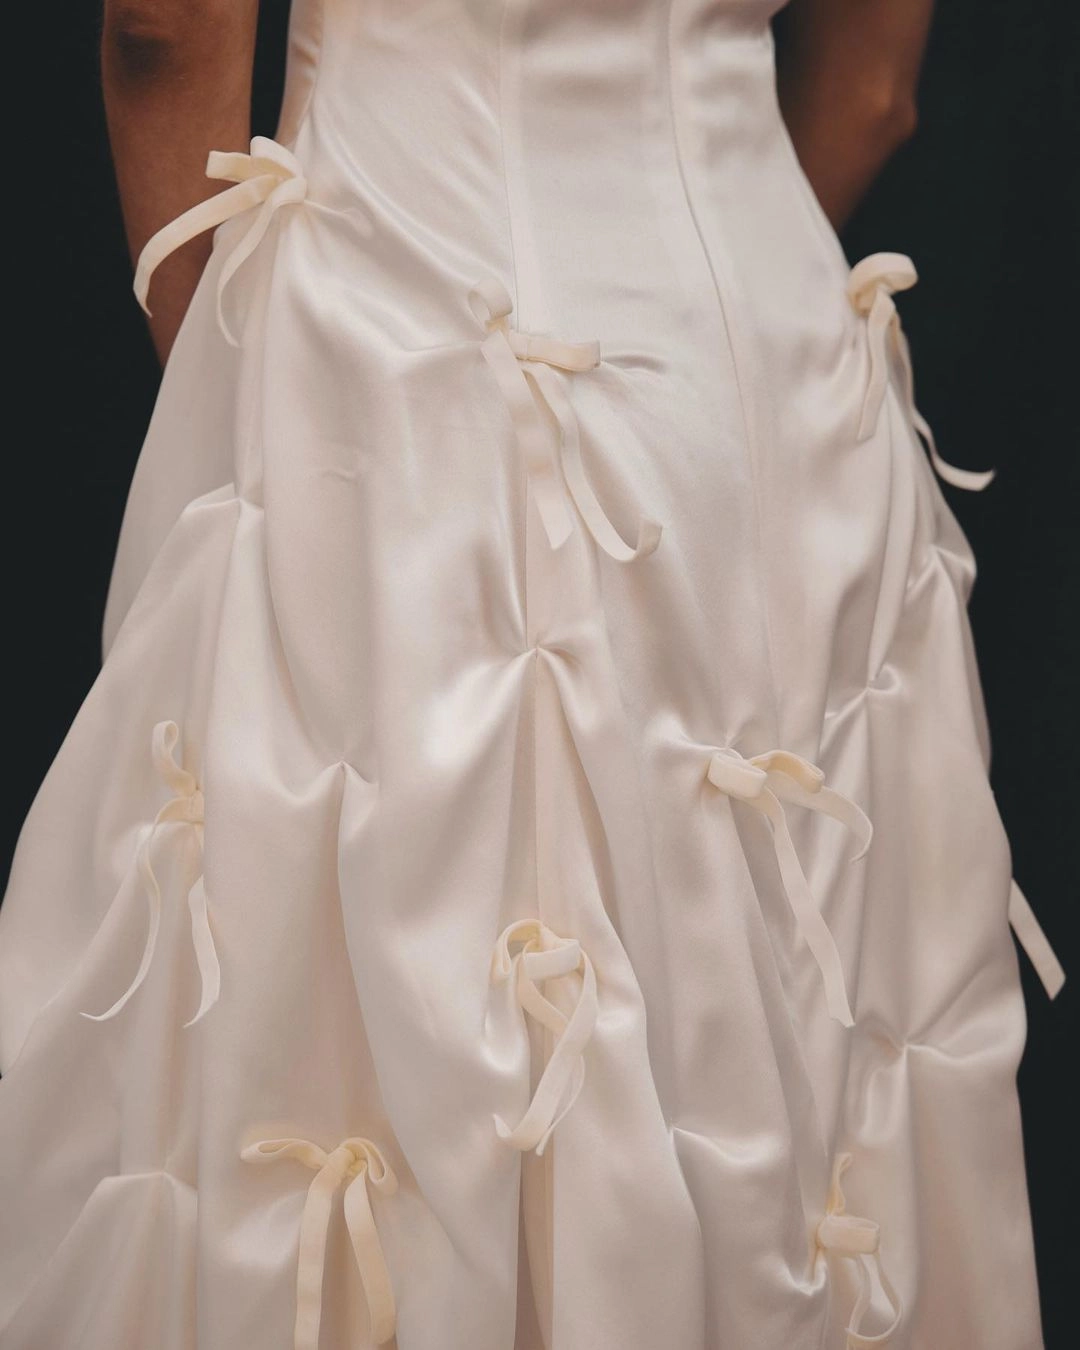 Simple Wedding Dresses: 27 Best Looks, Expert Tips / Faqs